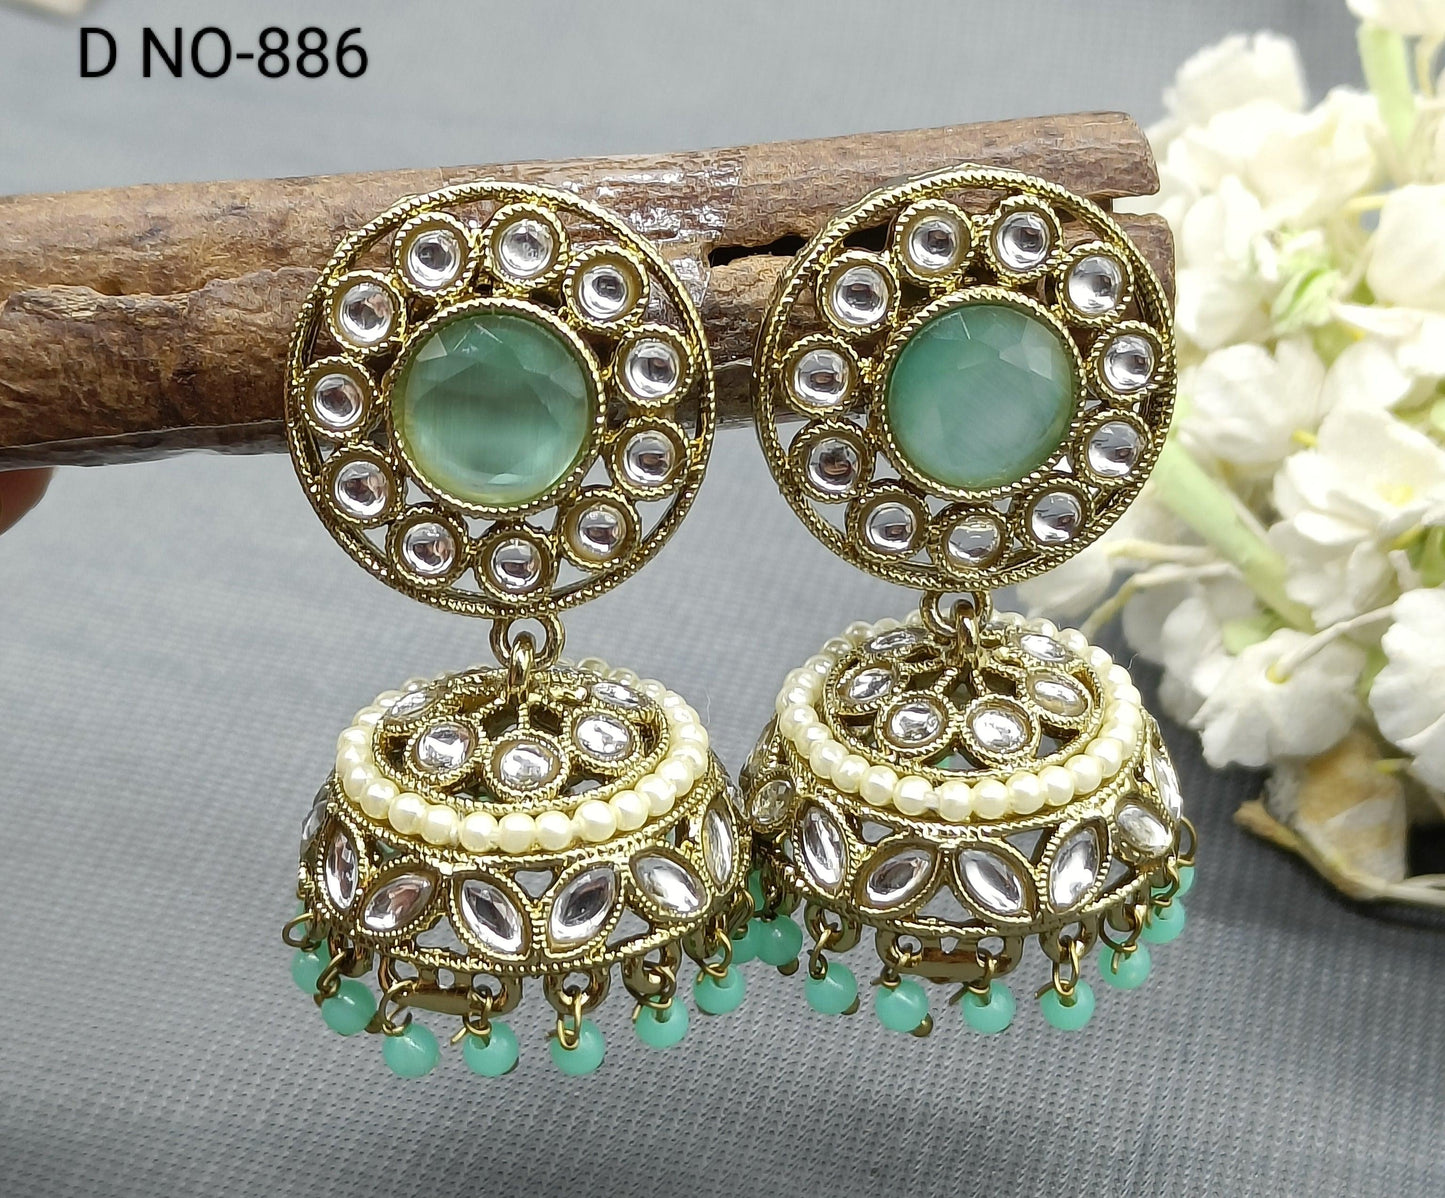 Antique Golden Kundan Jhumki Earrings Sku-886 A4 - rchiecreation